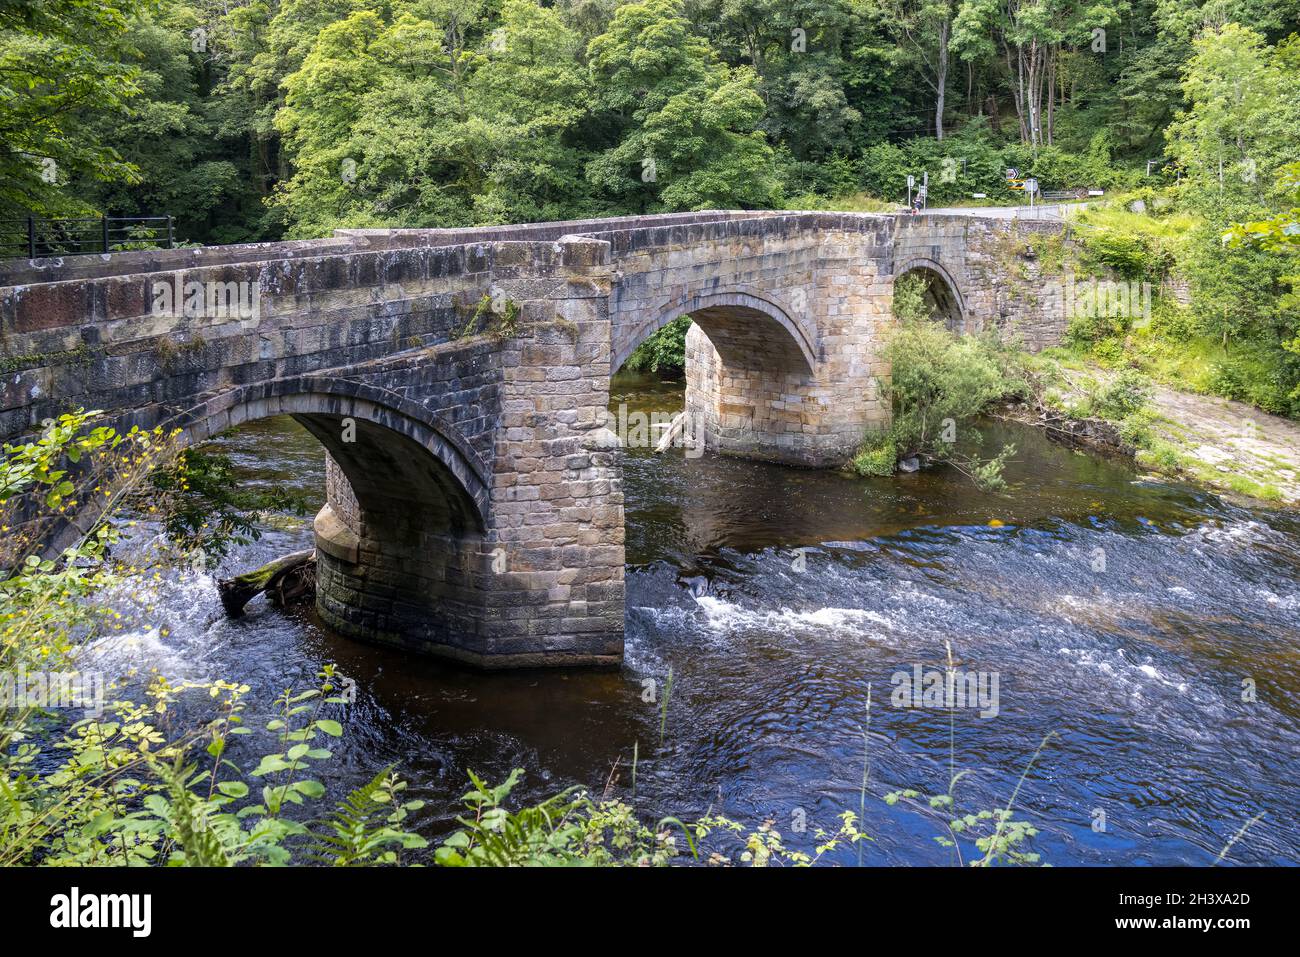 FRONCYSYLLTE, WREXHAM, WALES - JULY 15 : Stone bridge over the River Dee near Pontcysyllte Aqueduct, Froncysyllte, Wrexham, Wale Stock Photo